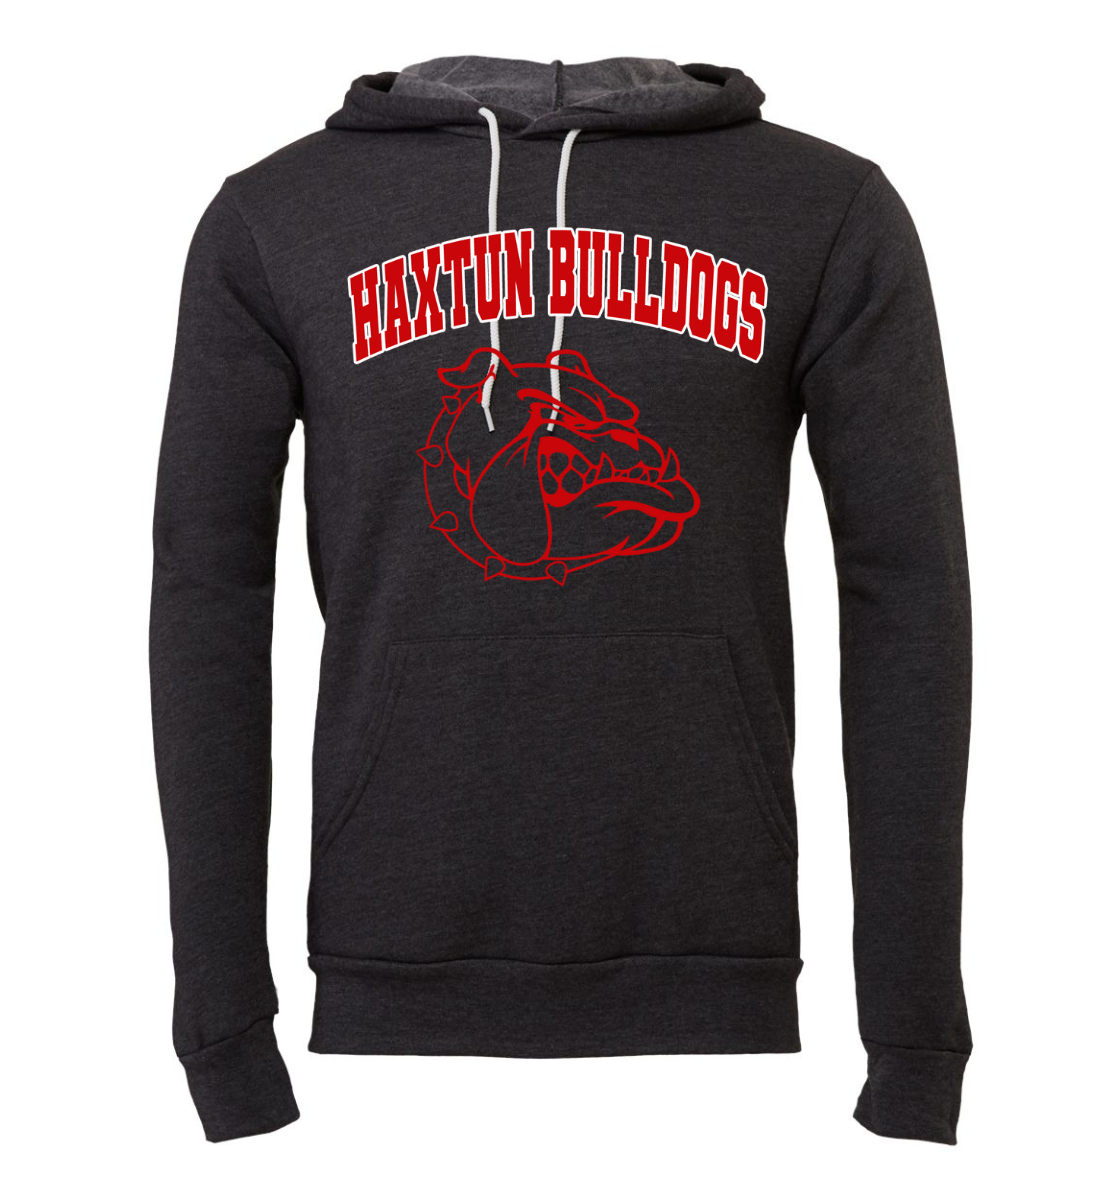 haxtun bulldogs hoodie - unisex - elevate your spirit!